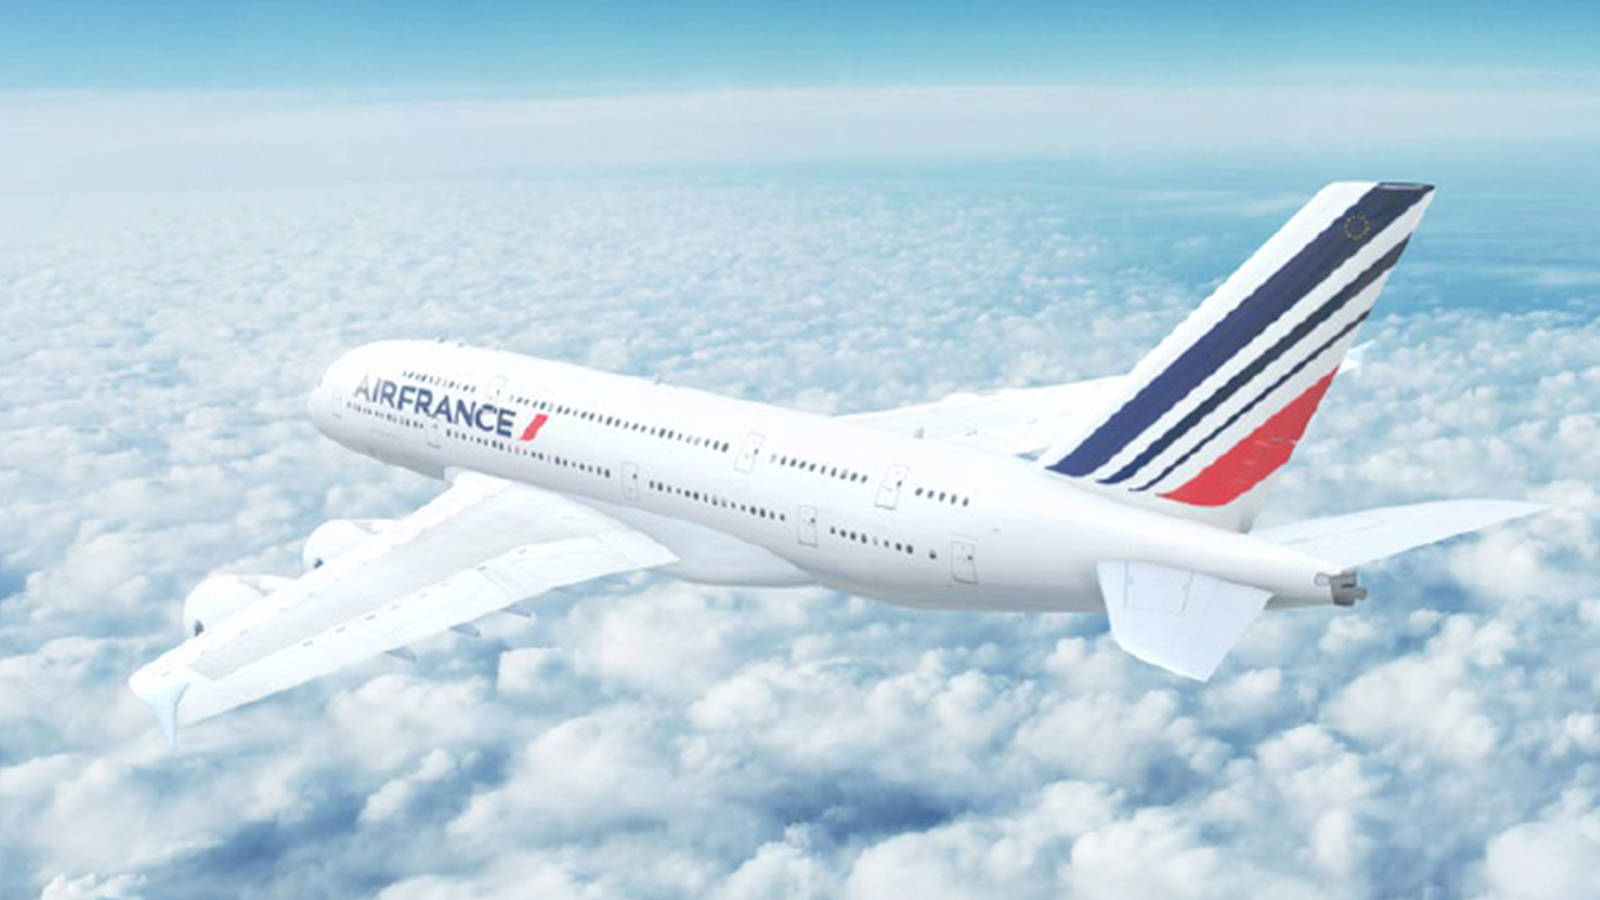 Air France Airbus A380 High Angle Shot Wallpaper